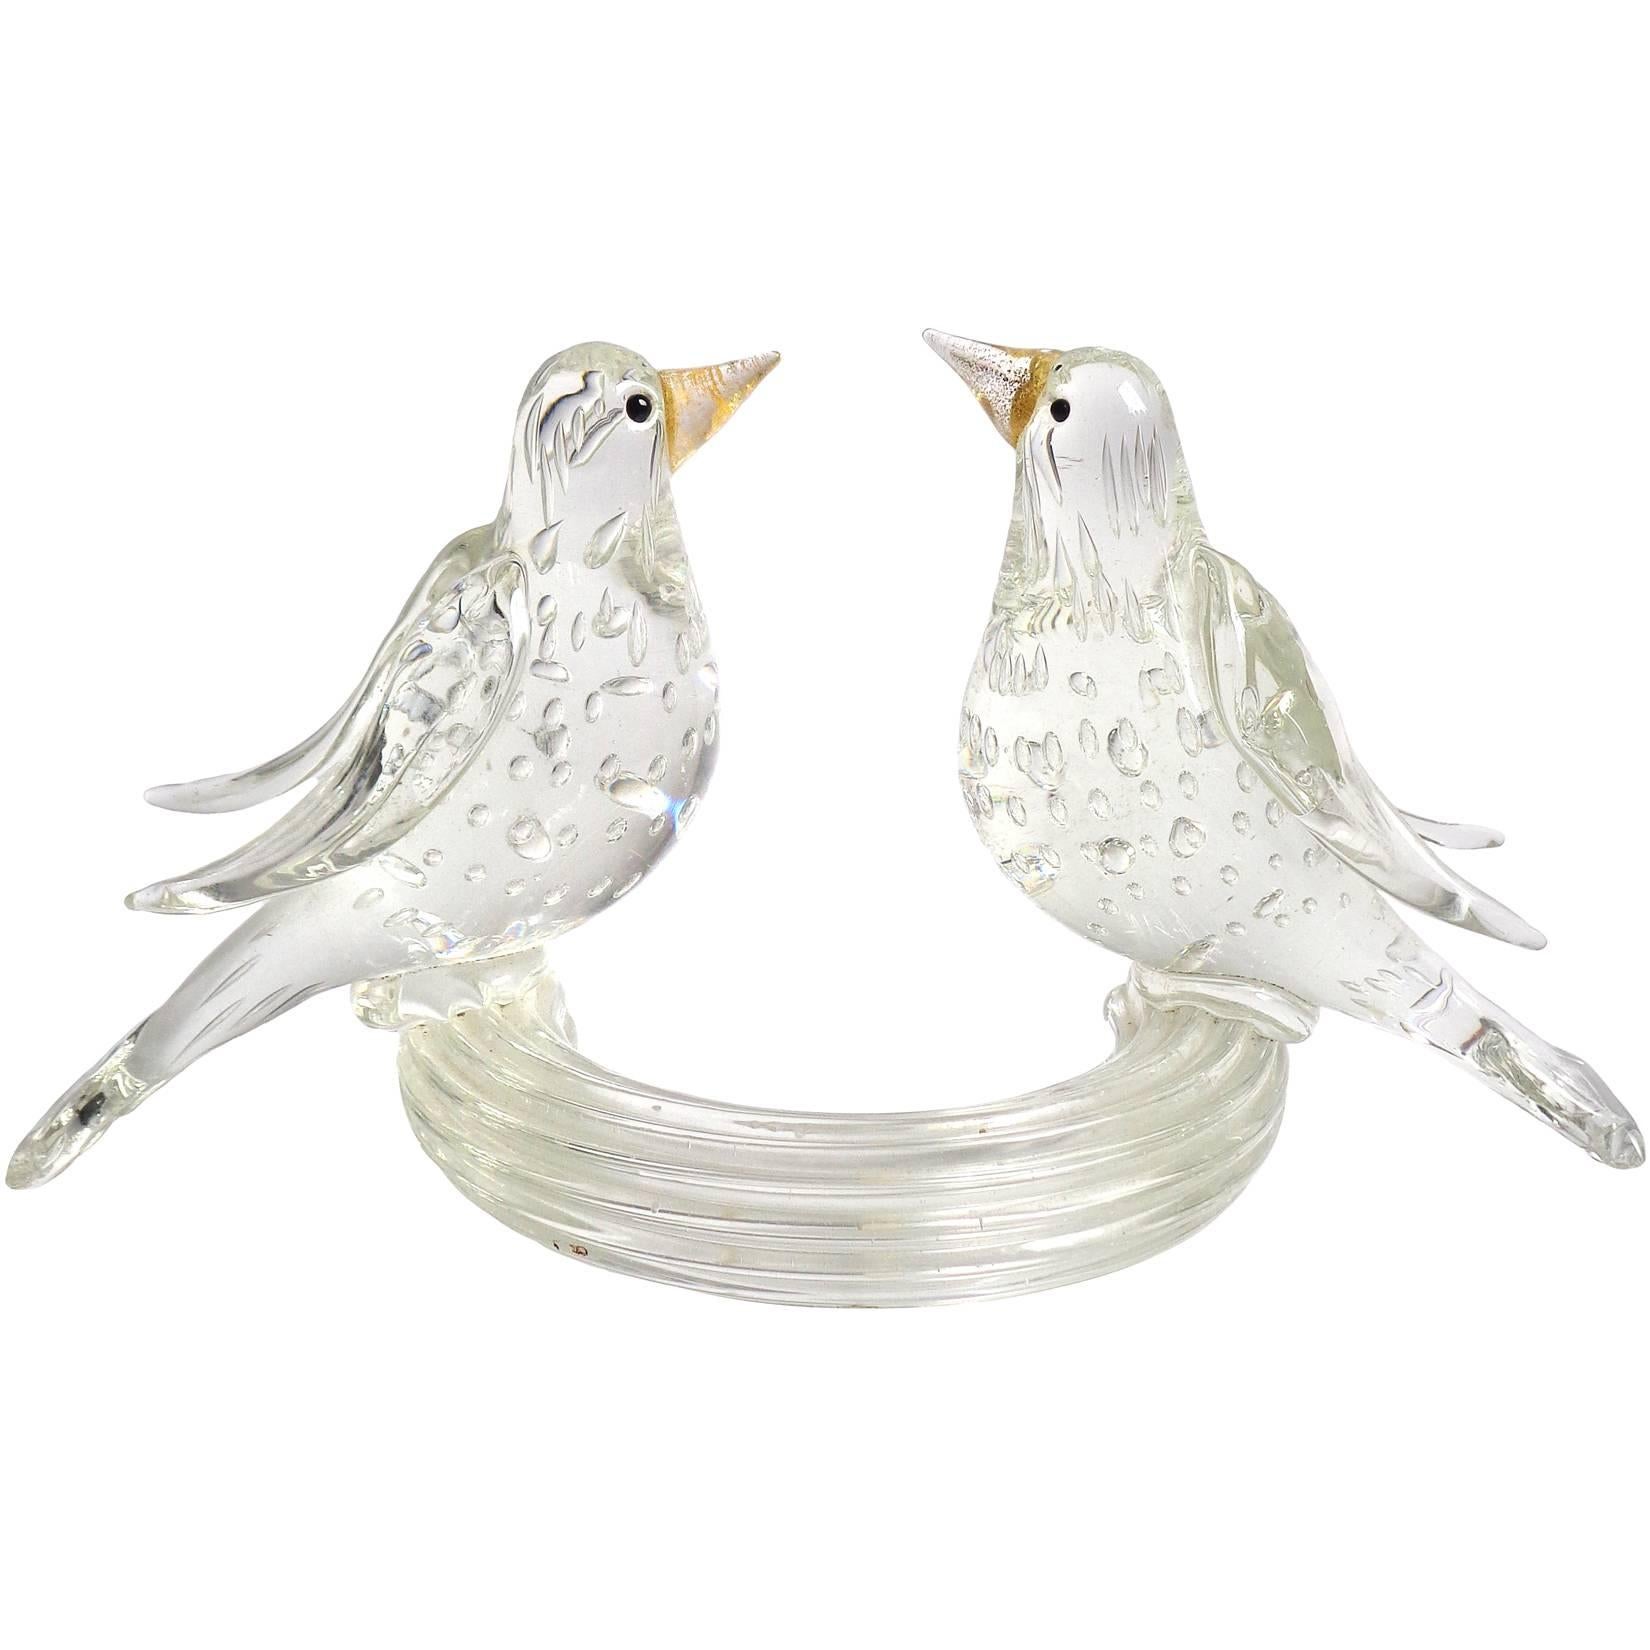 Barovier Toso Murano Crystal Clear, Gold, Italian Art Glass Birds Sculpture